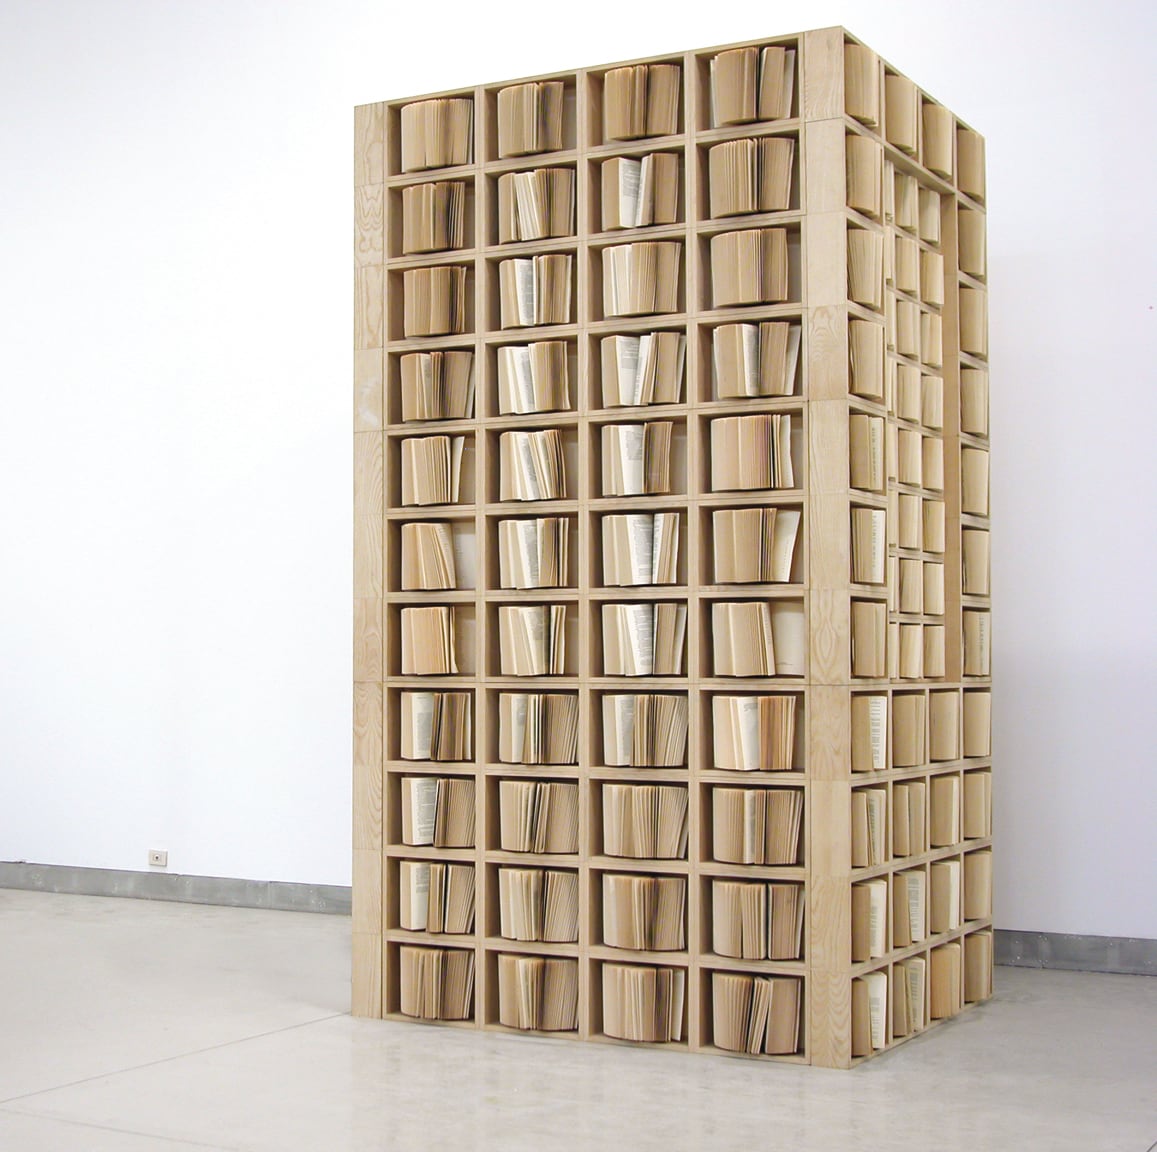 Svetlana Kopystiansky, "Library", 1990. Struttura di legno, libri 300 x 180 x 180 cm